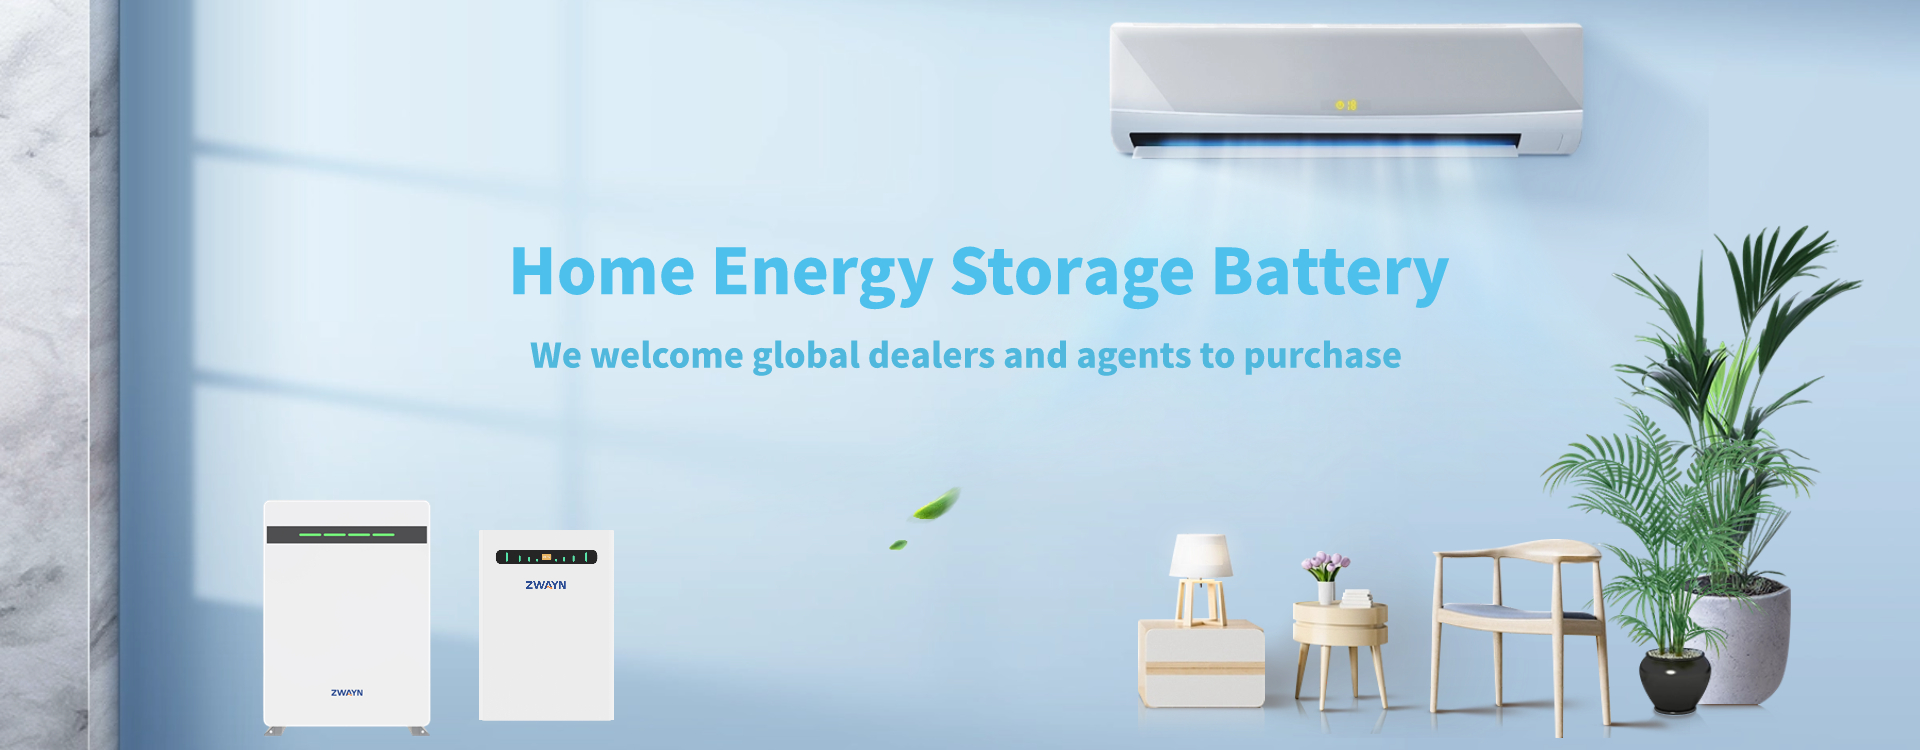 Zwayn home energy storage system